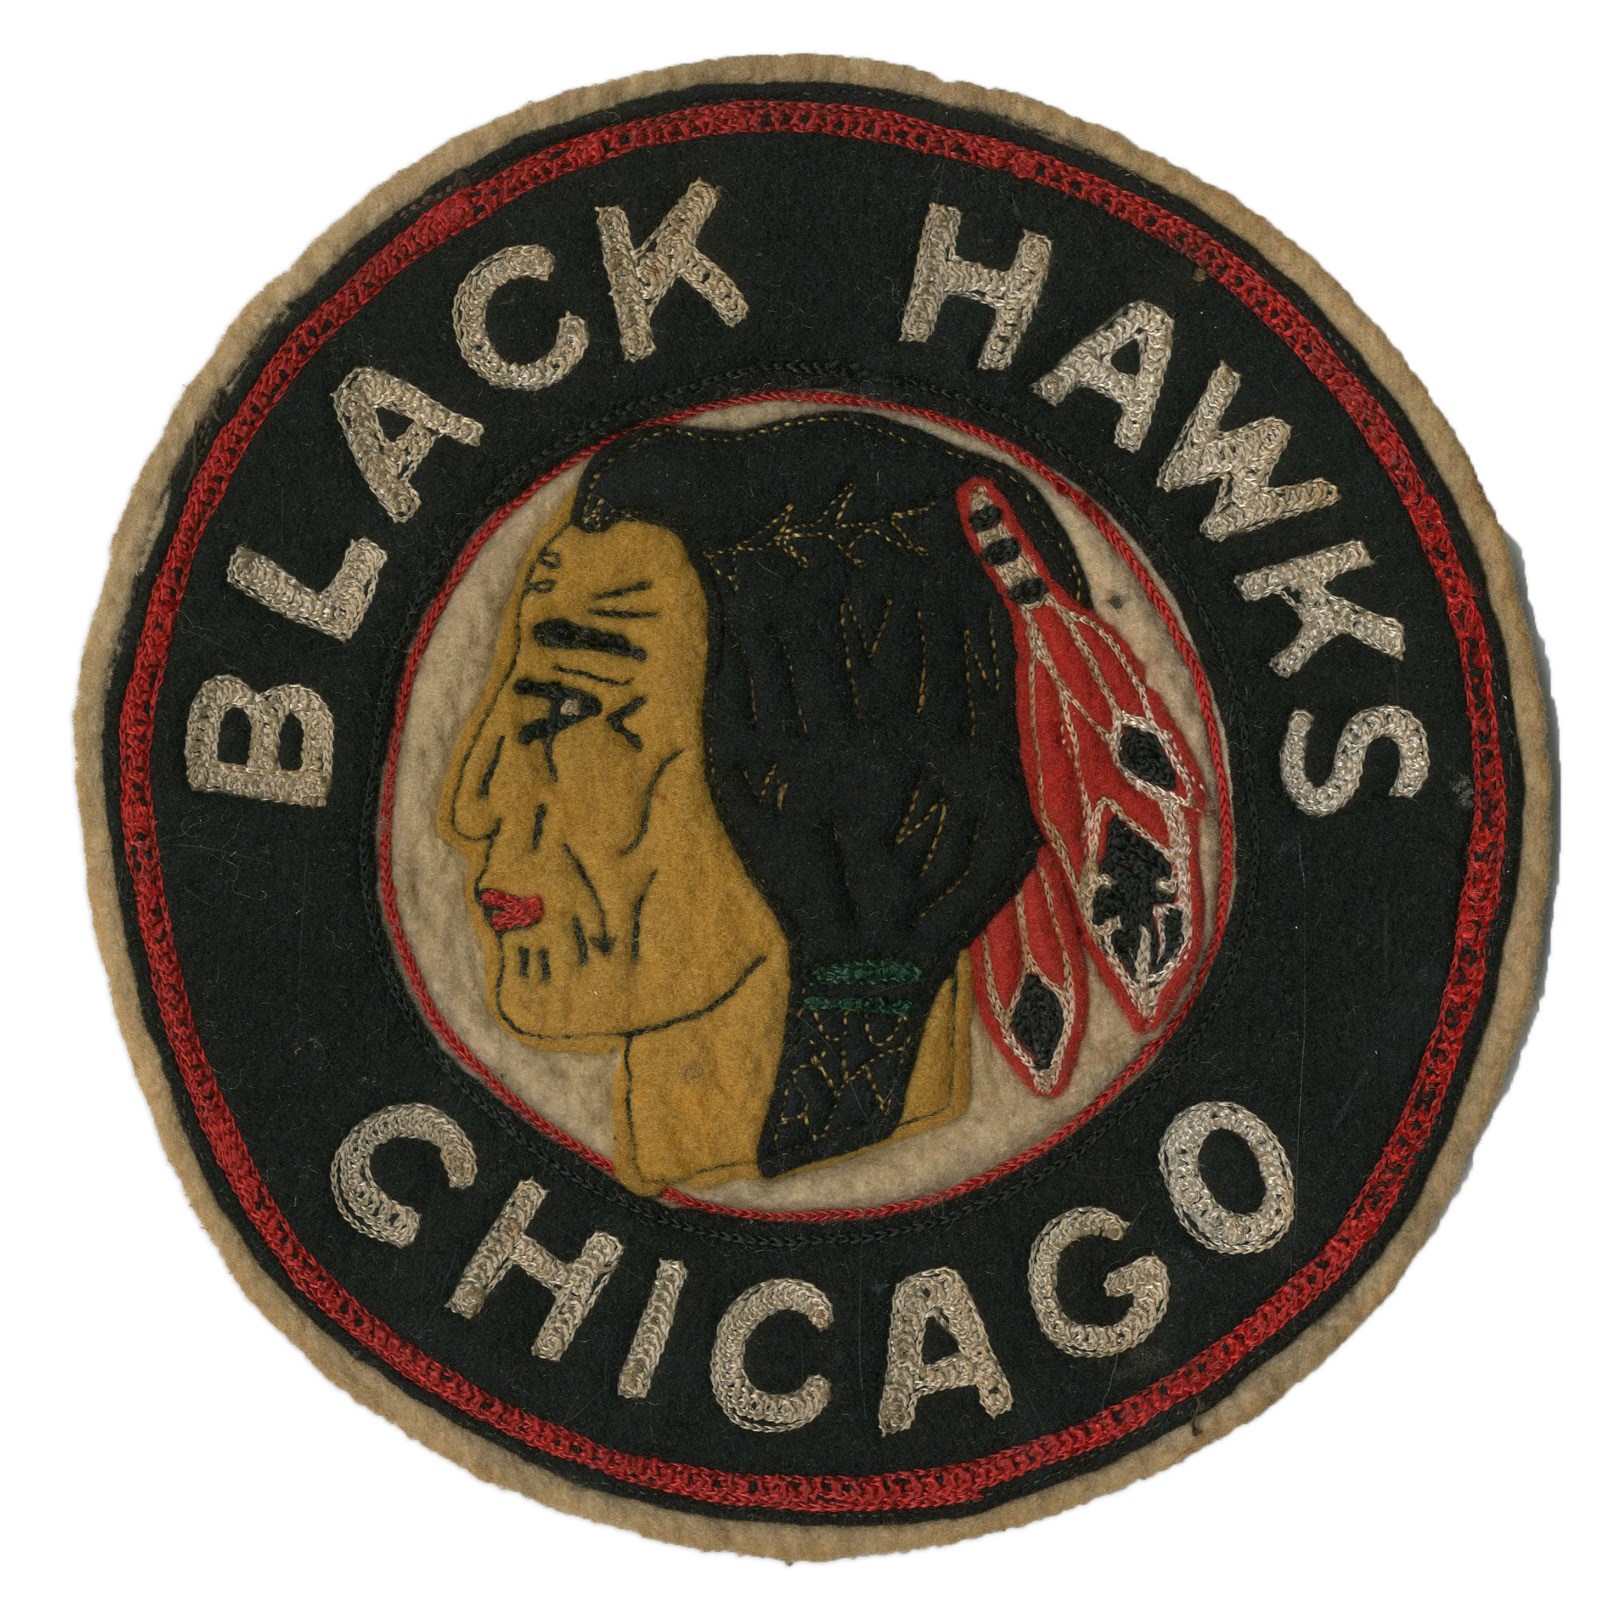 85-86 1st Goalieman - CHICAGO BLACKHAWKS JERSEY HISTORY